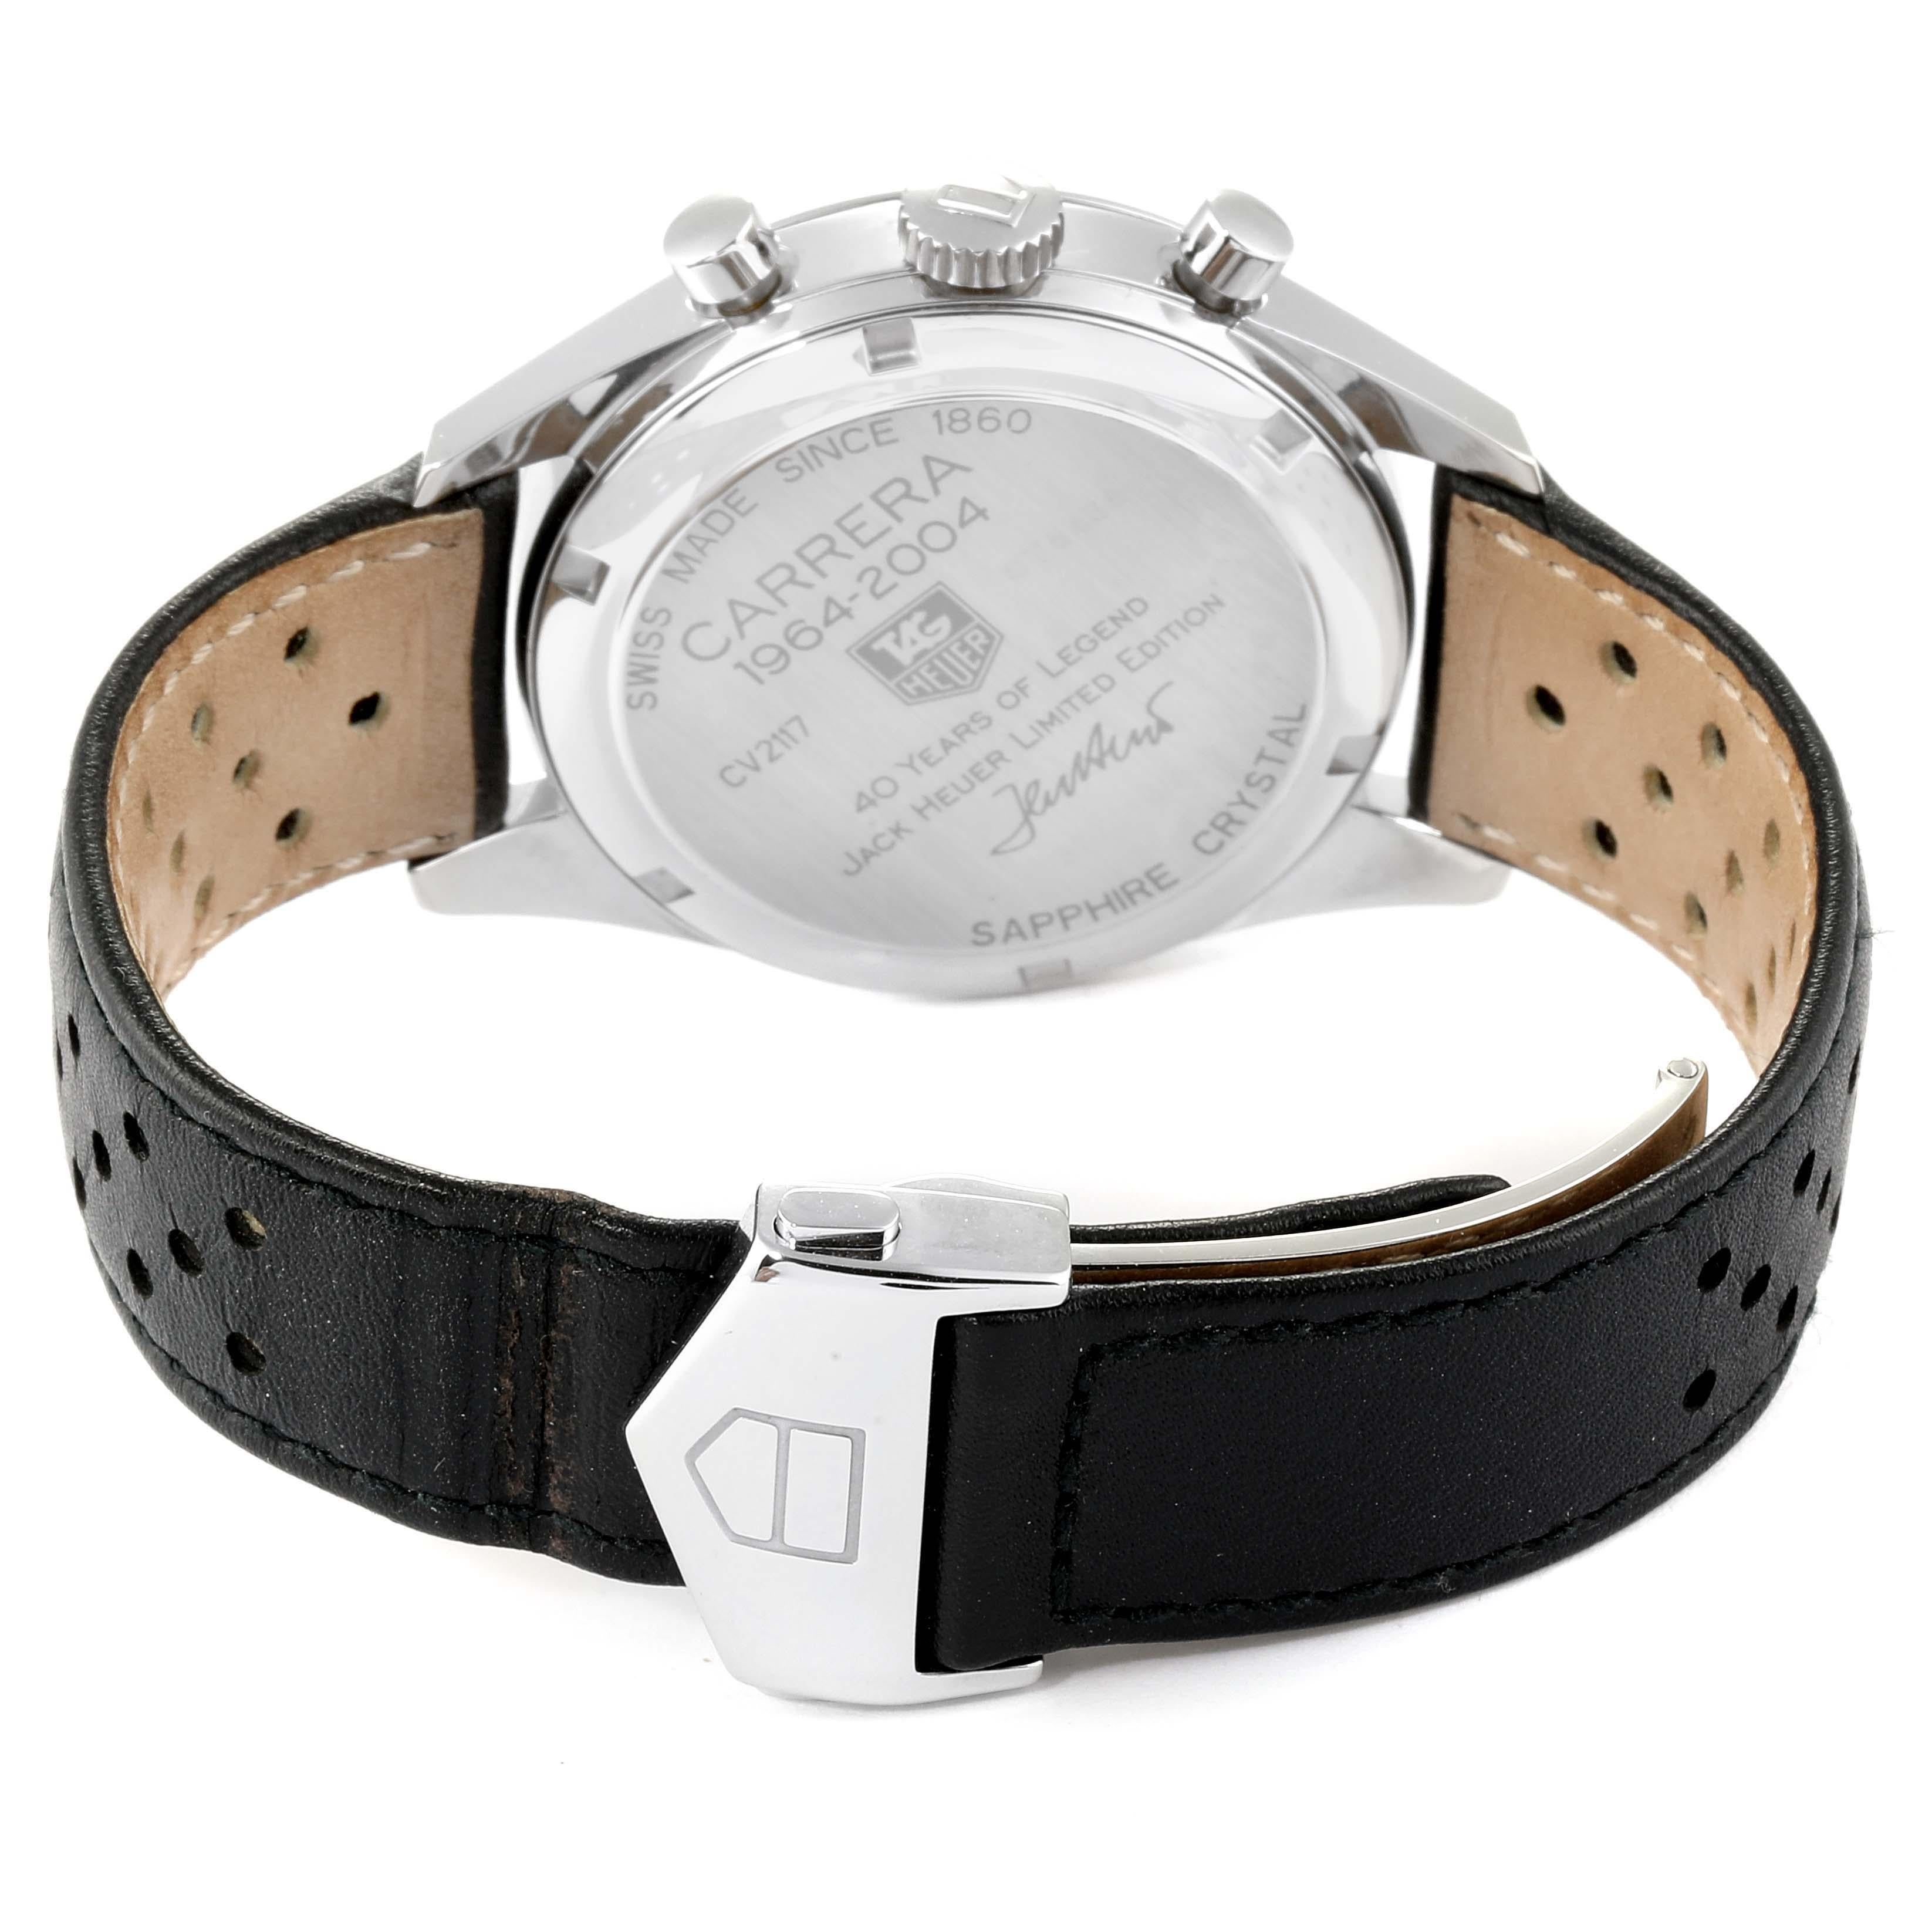 TAG Heuer Carrera Chronograph Limited Edition Men's Watch CV2117 Box Card 2